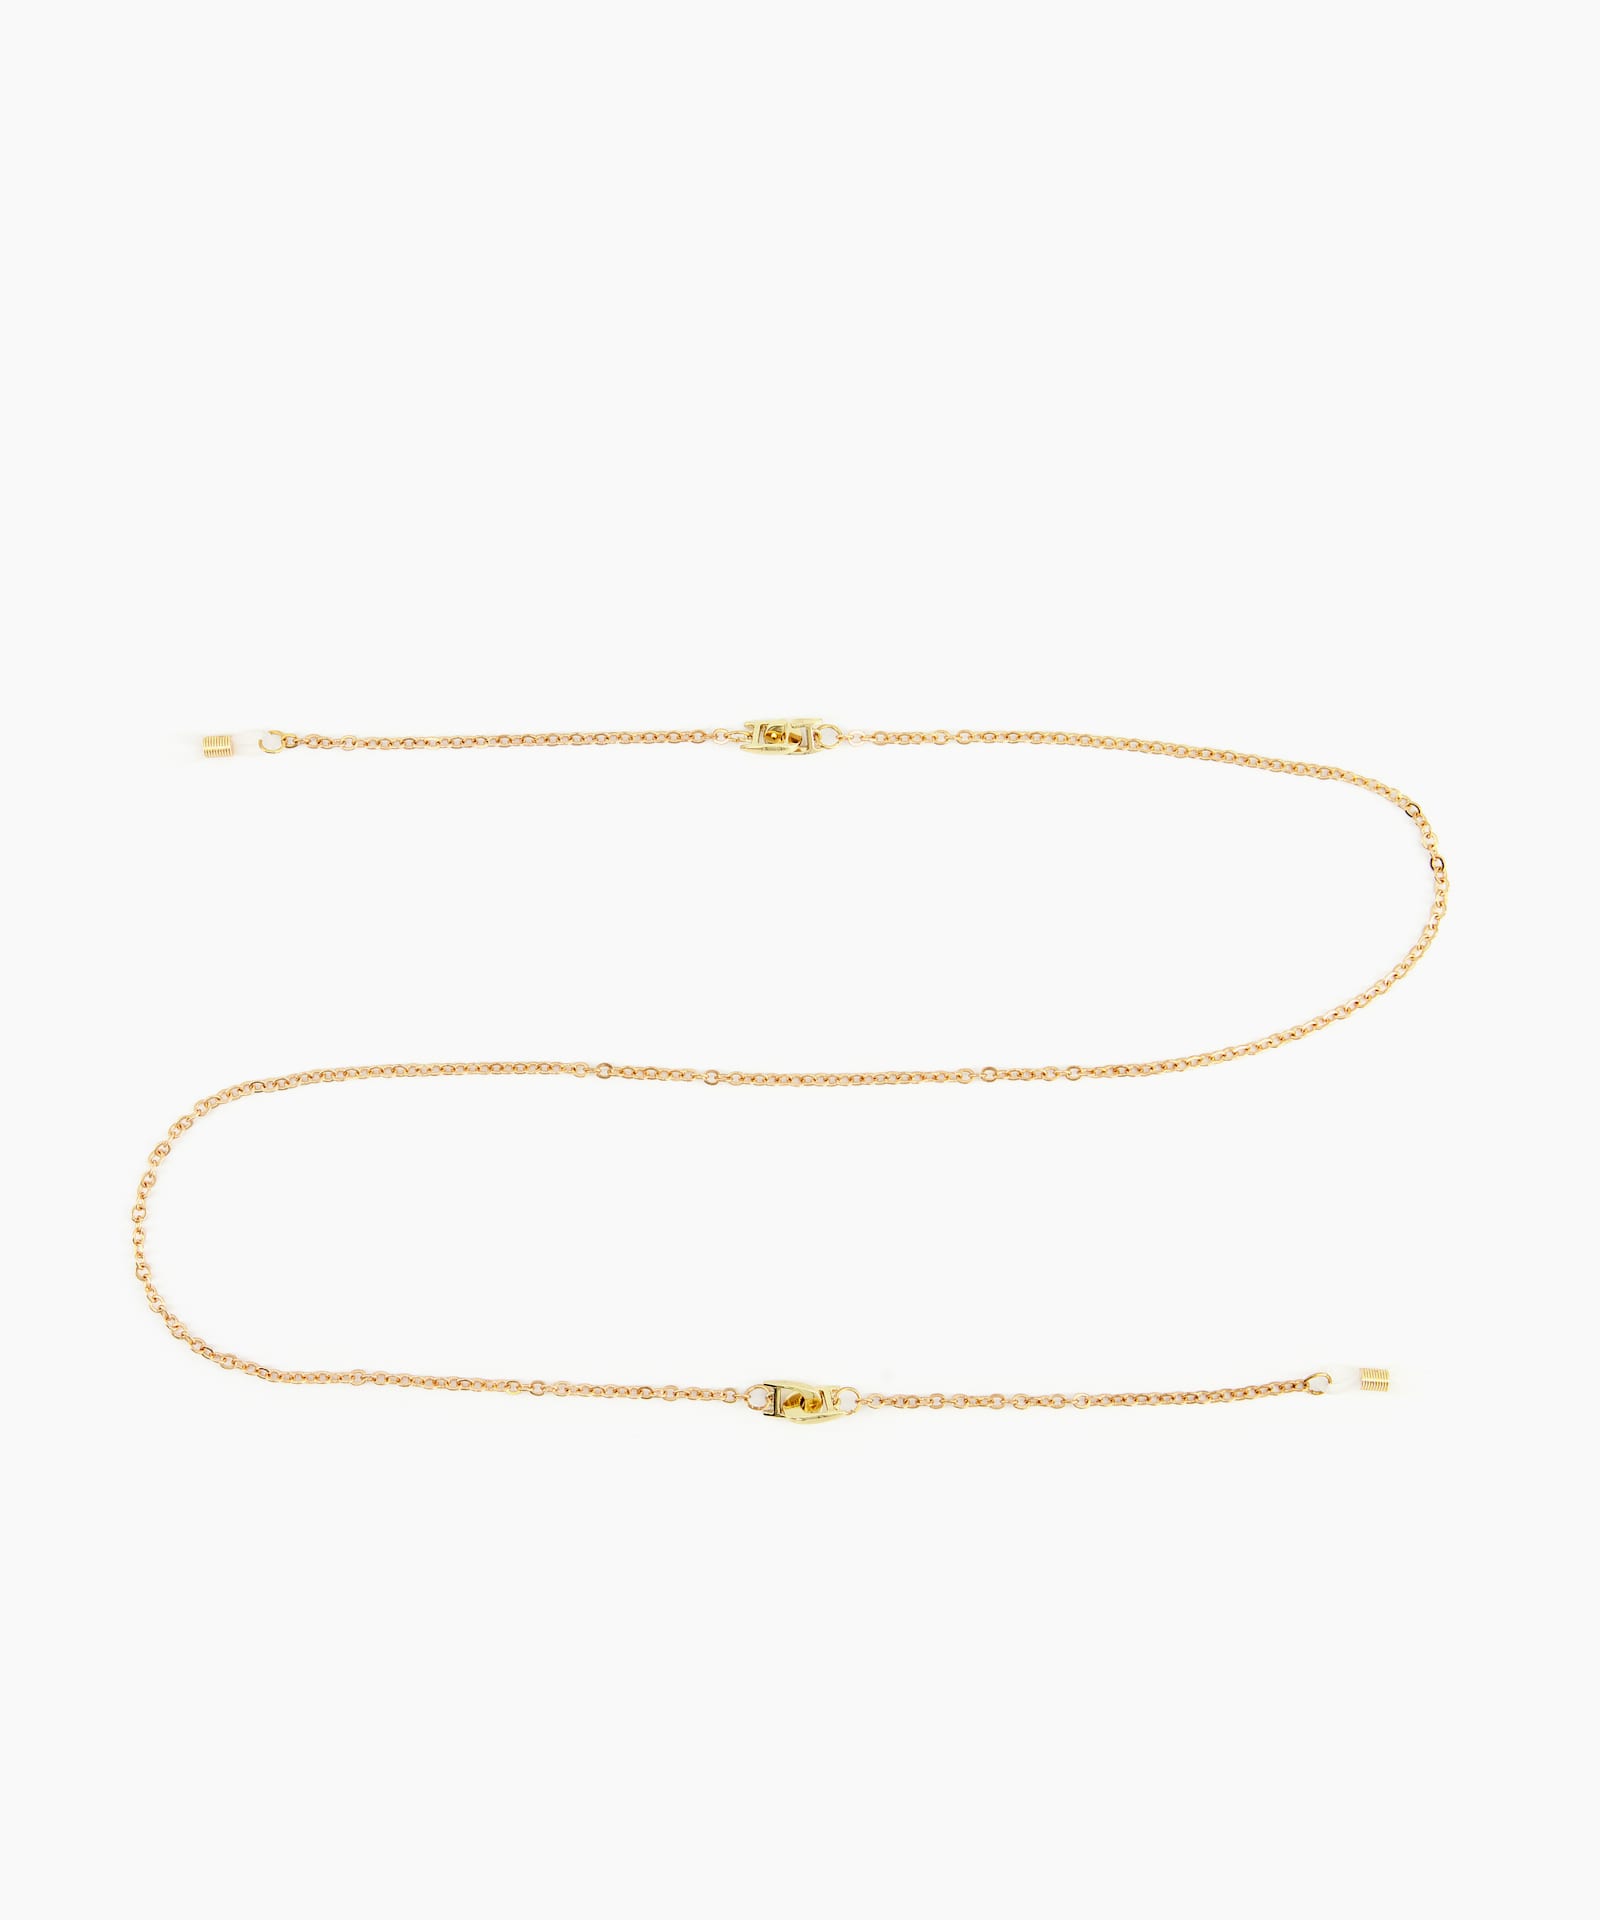 Sunglass Chain, Gold, large